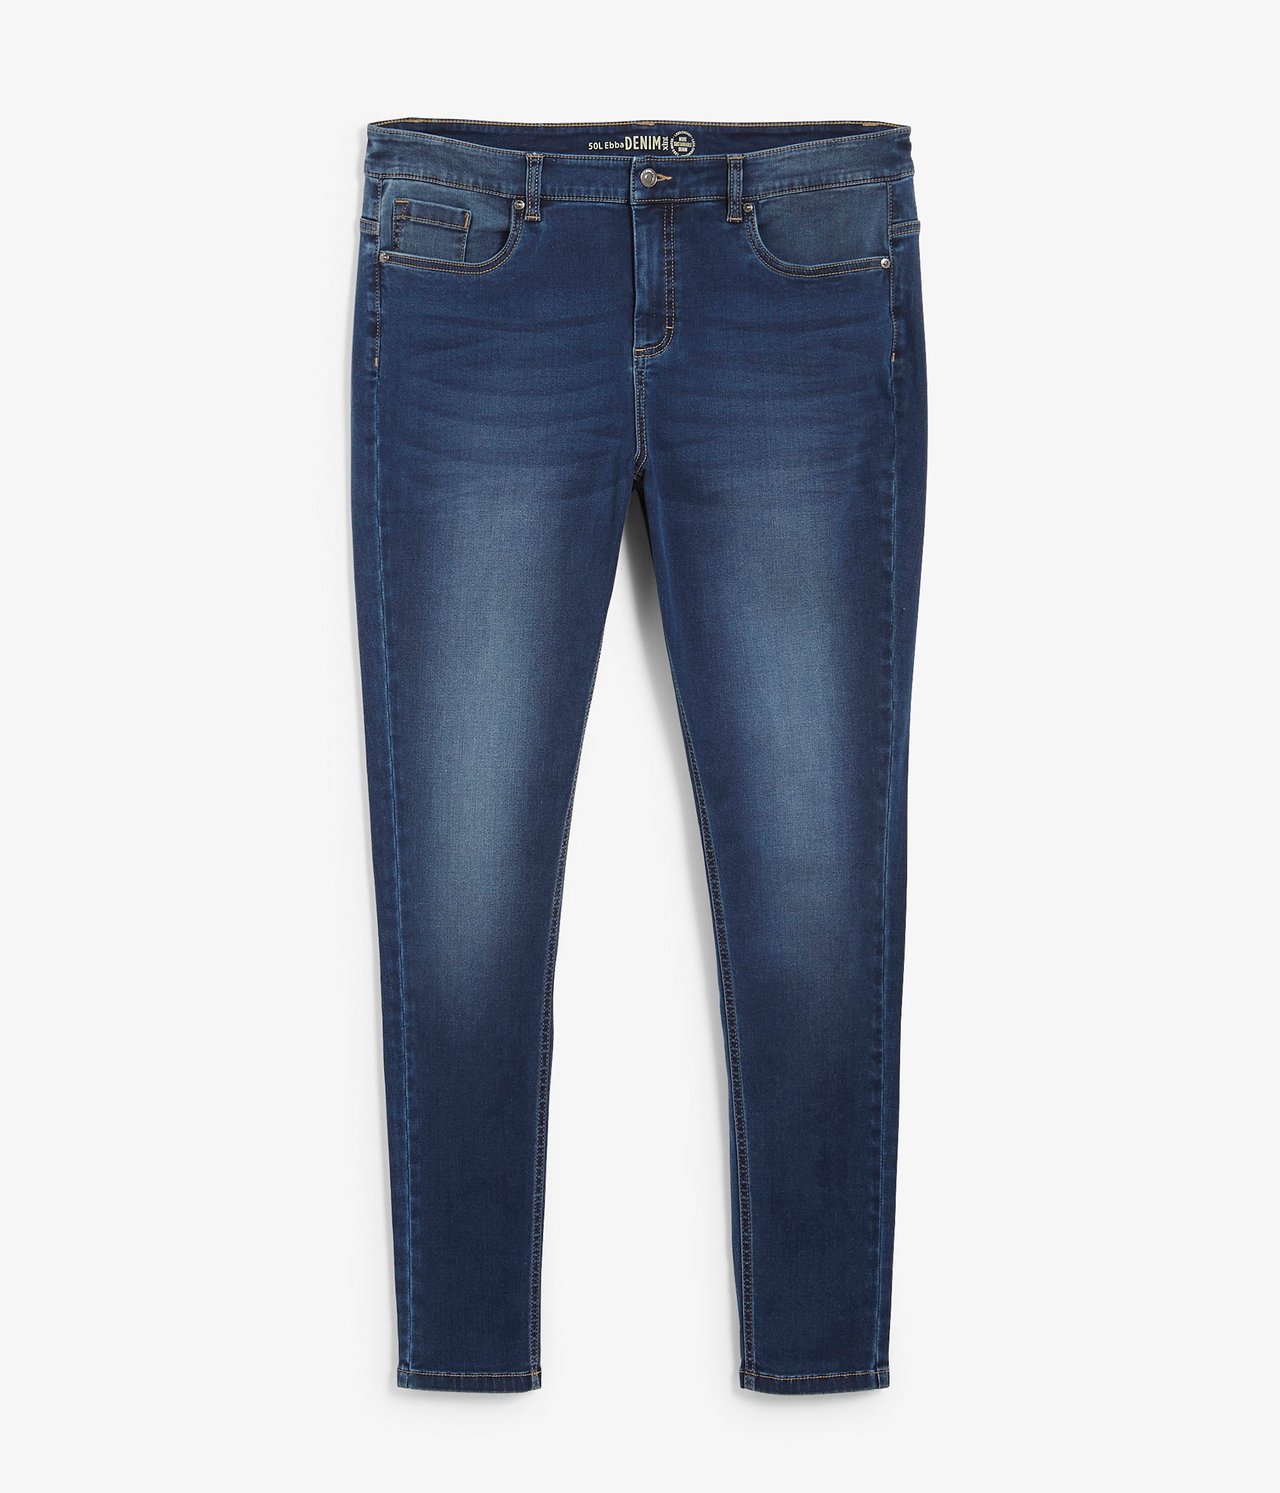 Ebba slim jeans extra long leg Mörk denim - null - 1